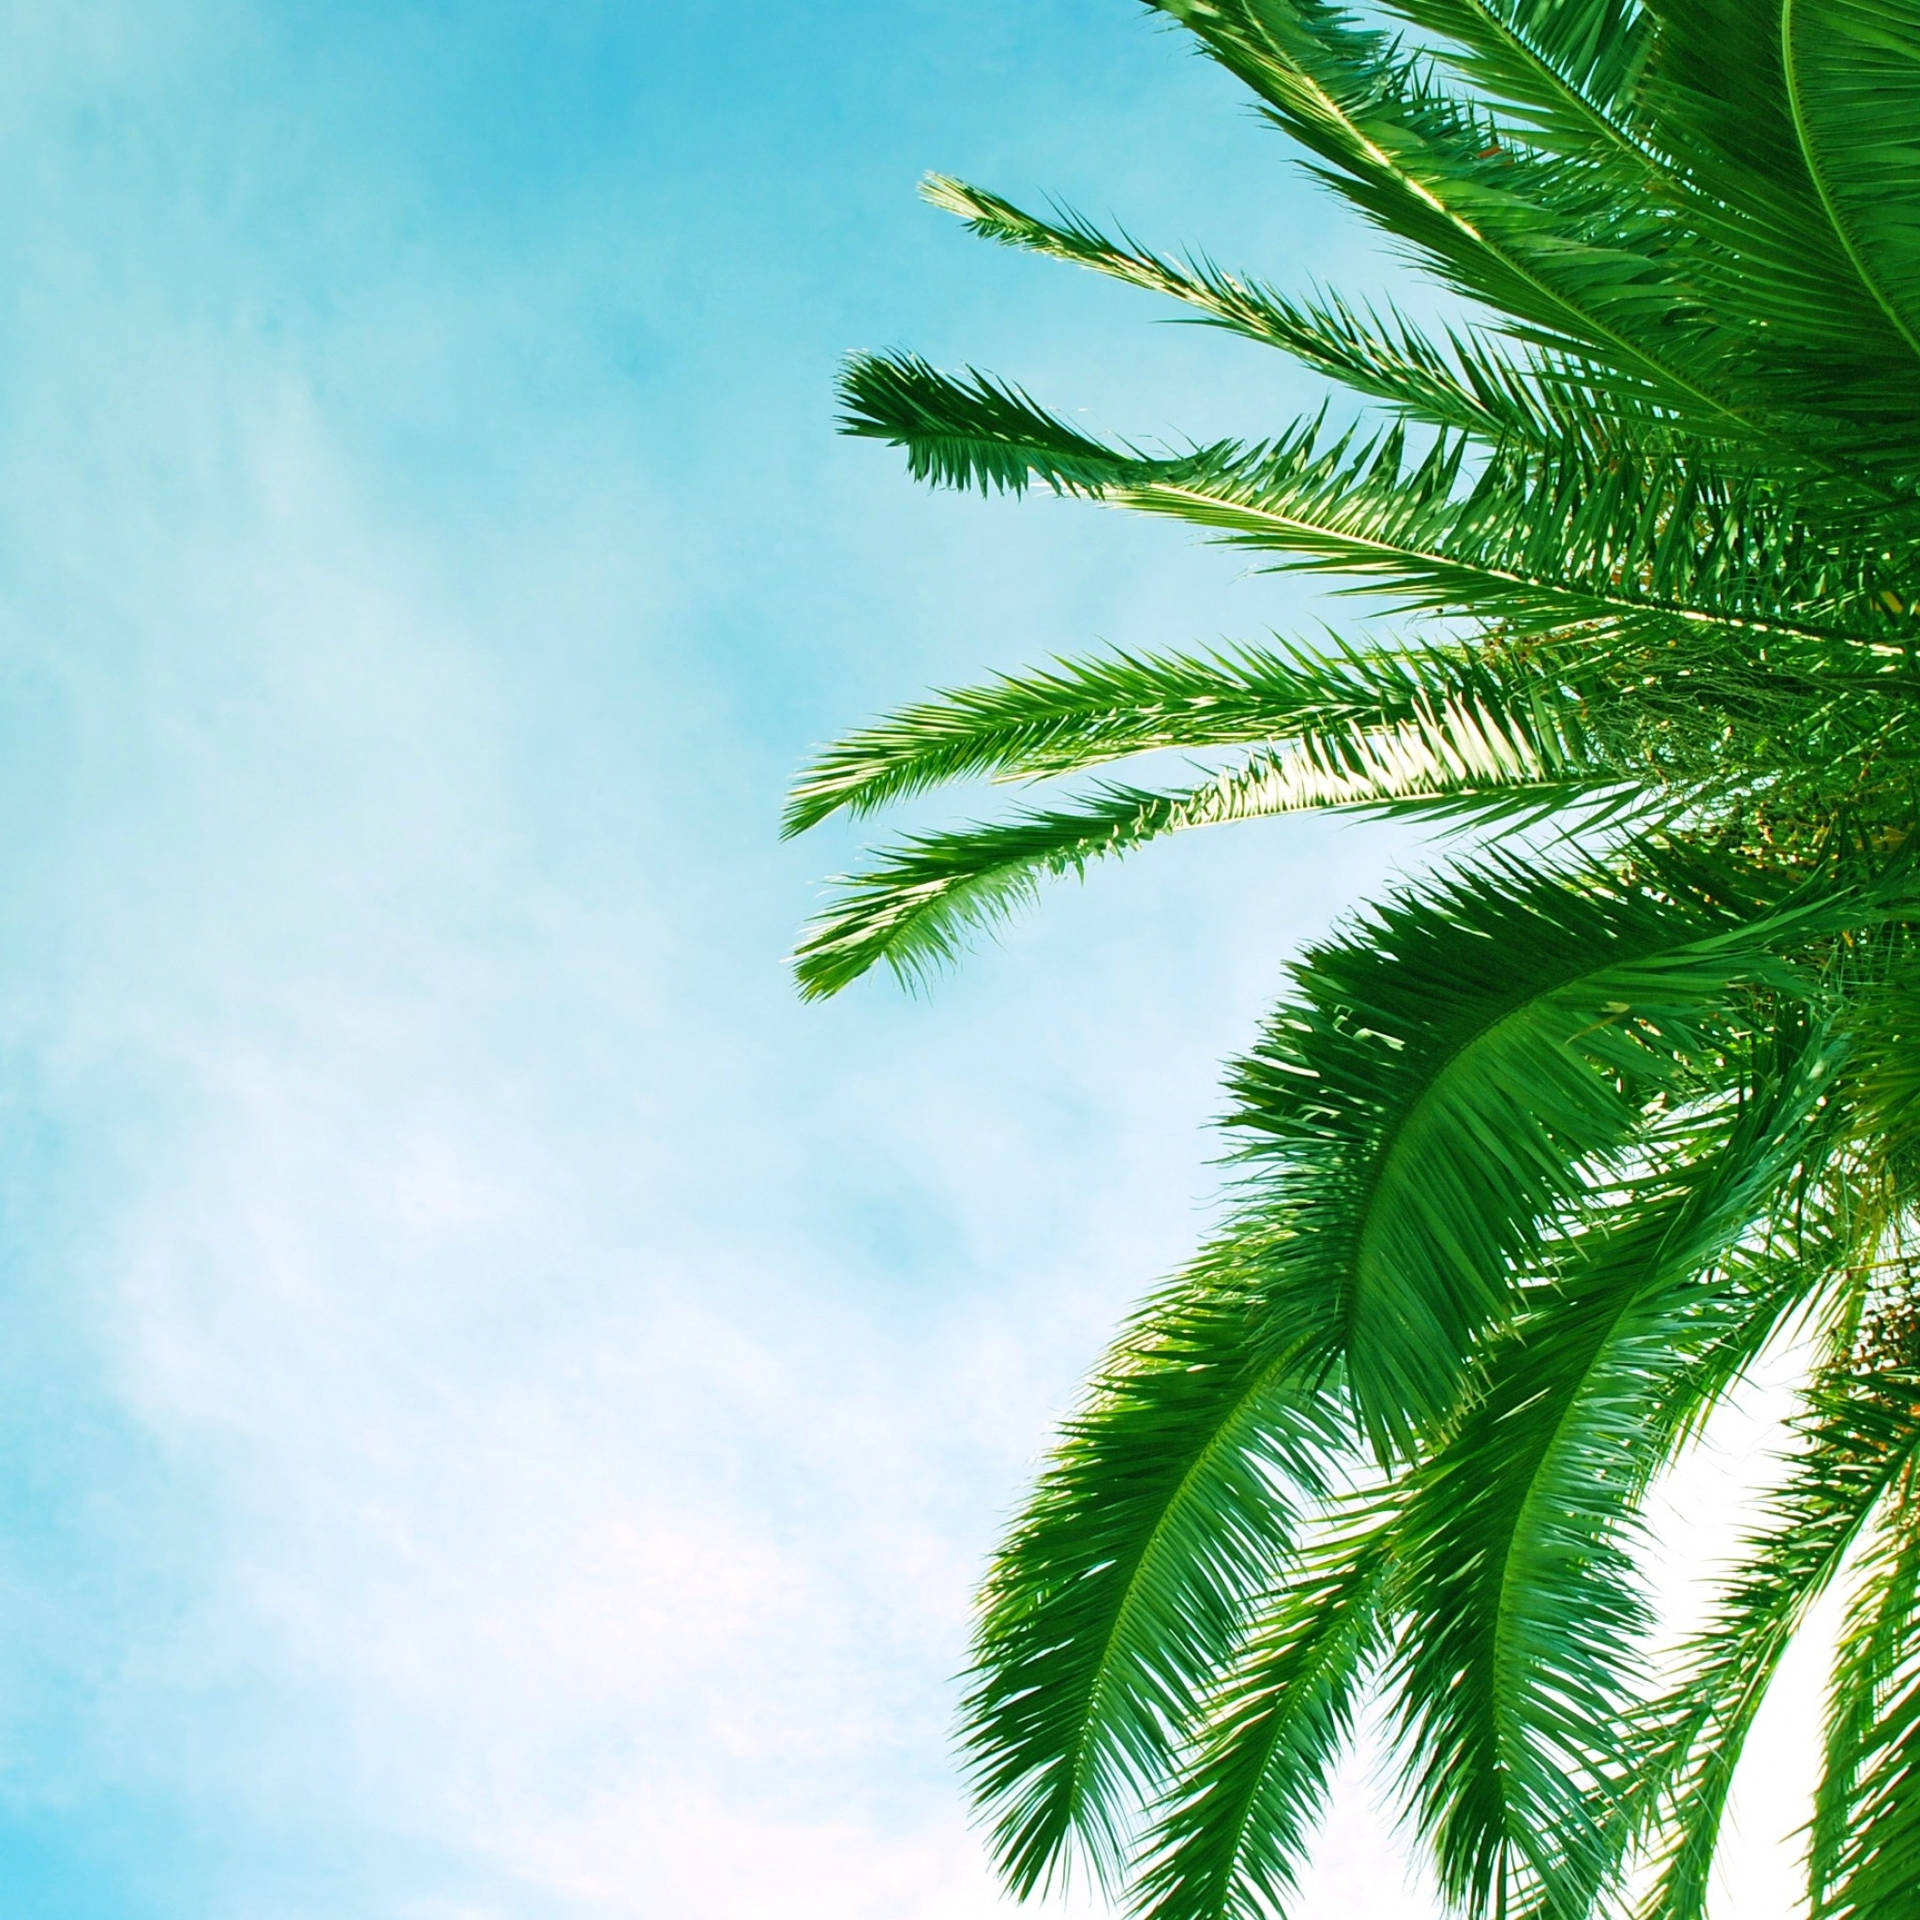 Palm Tree Leaves On Azure Sky